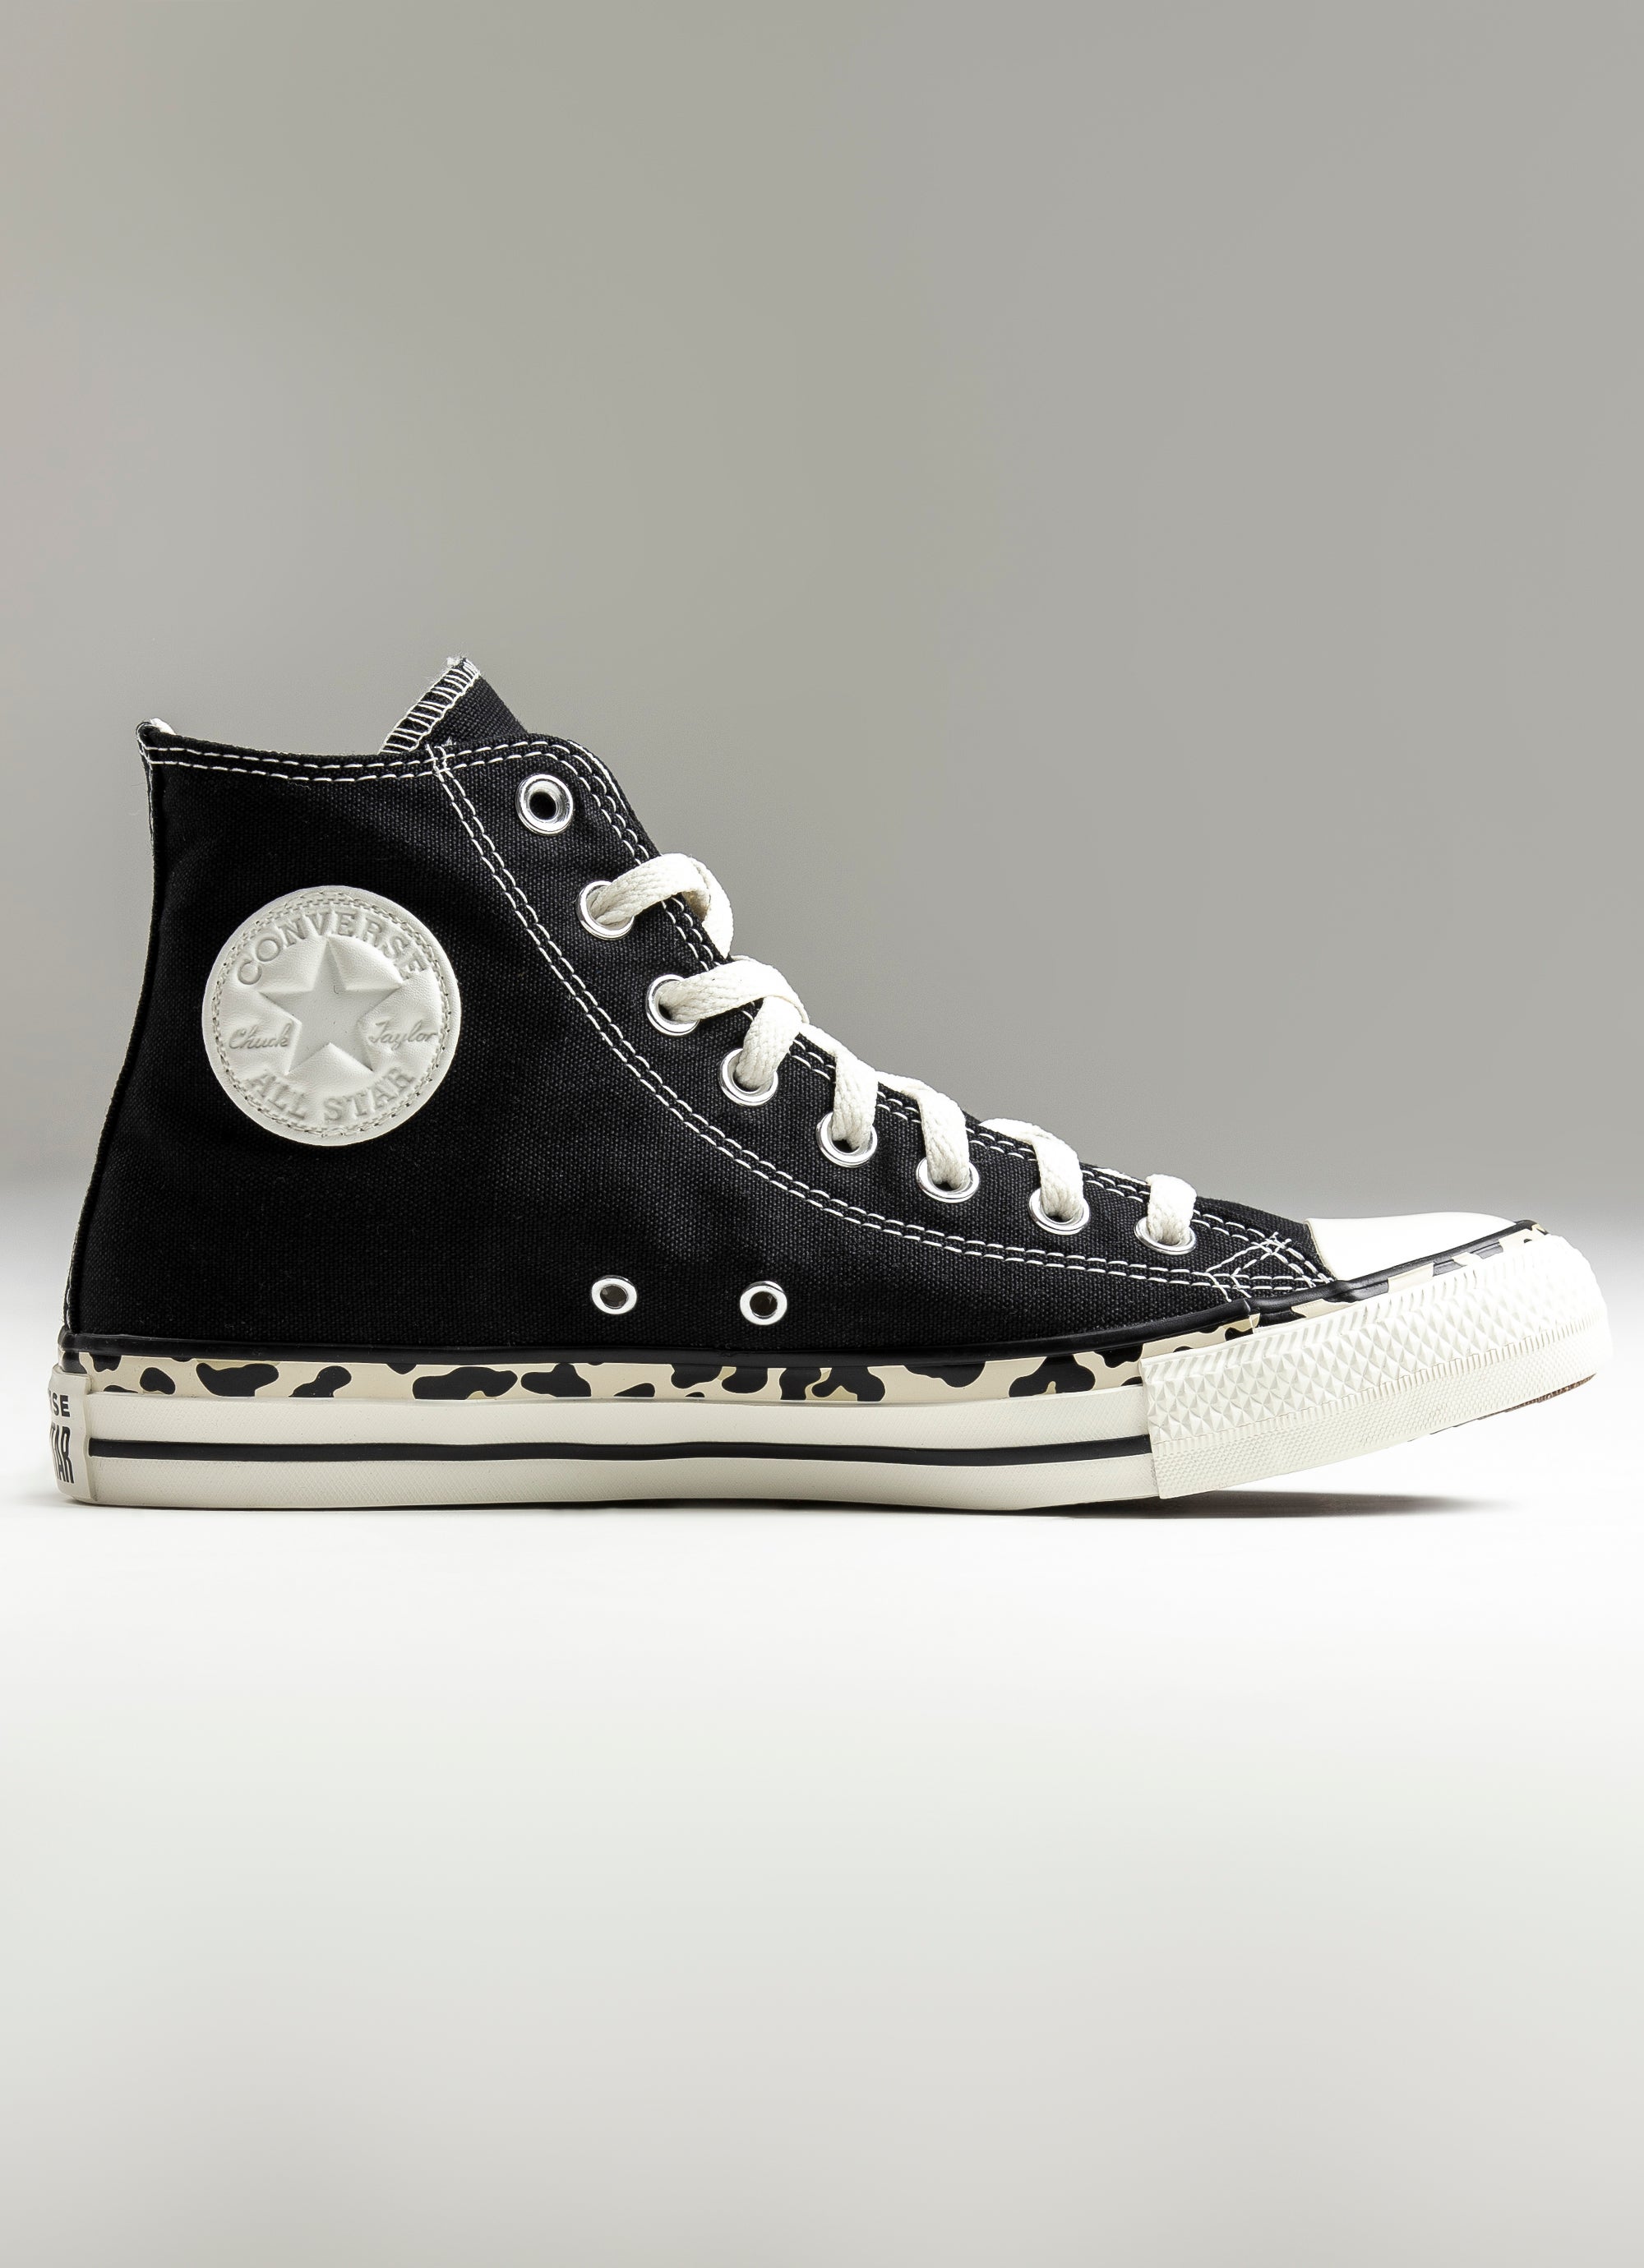 converse shoes online nz